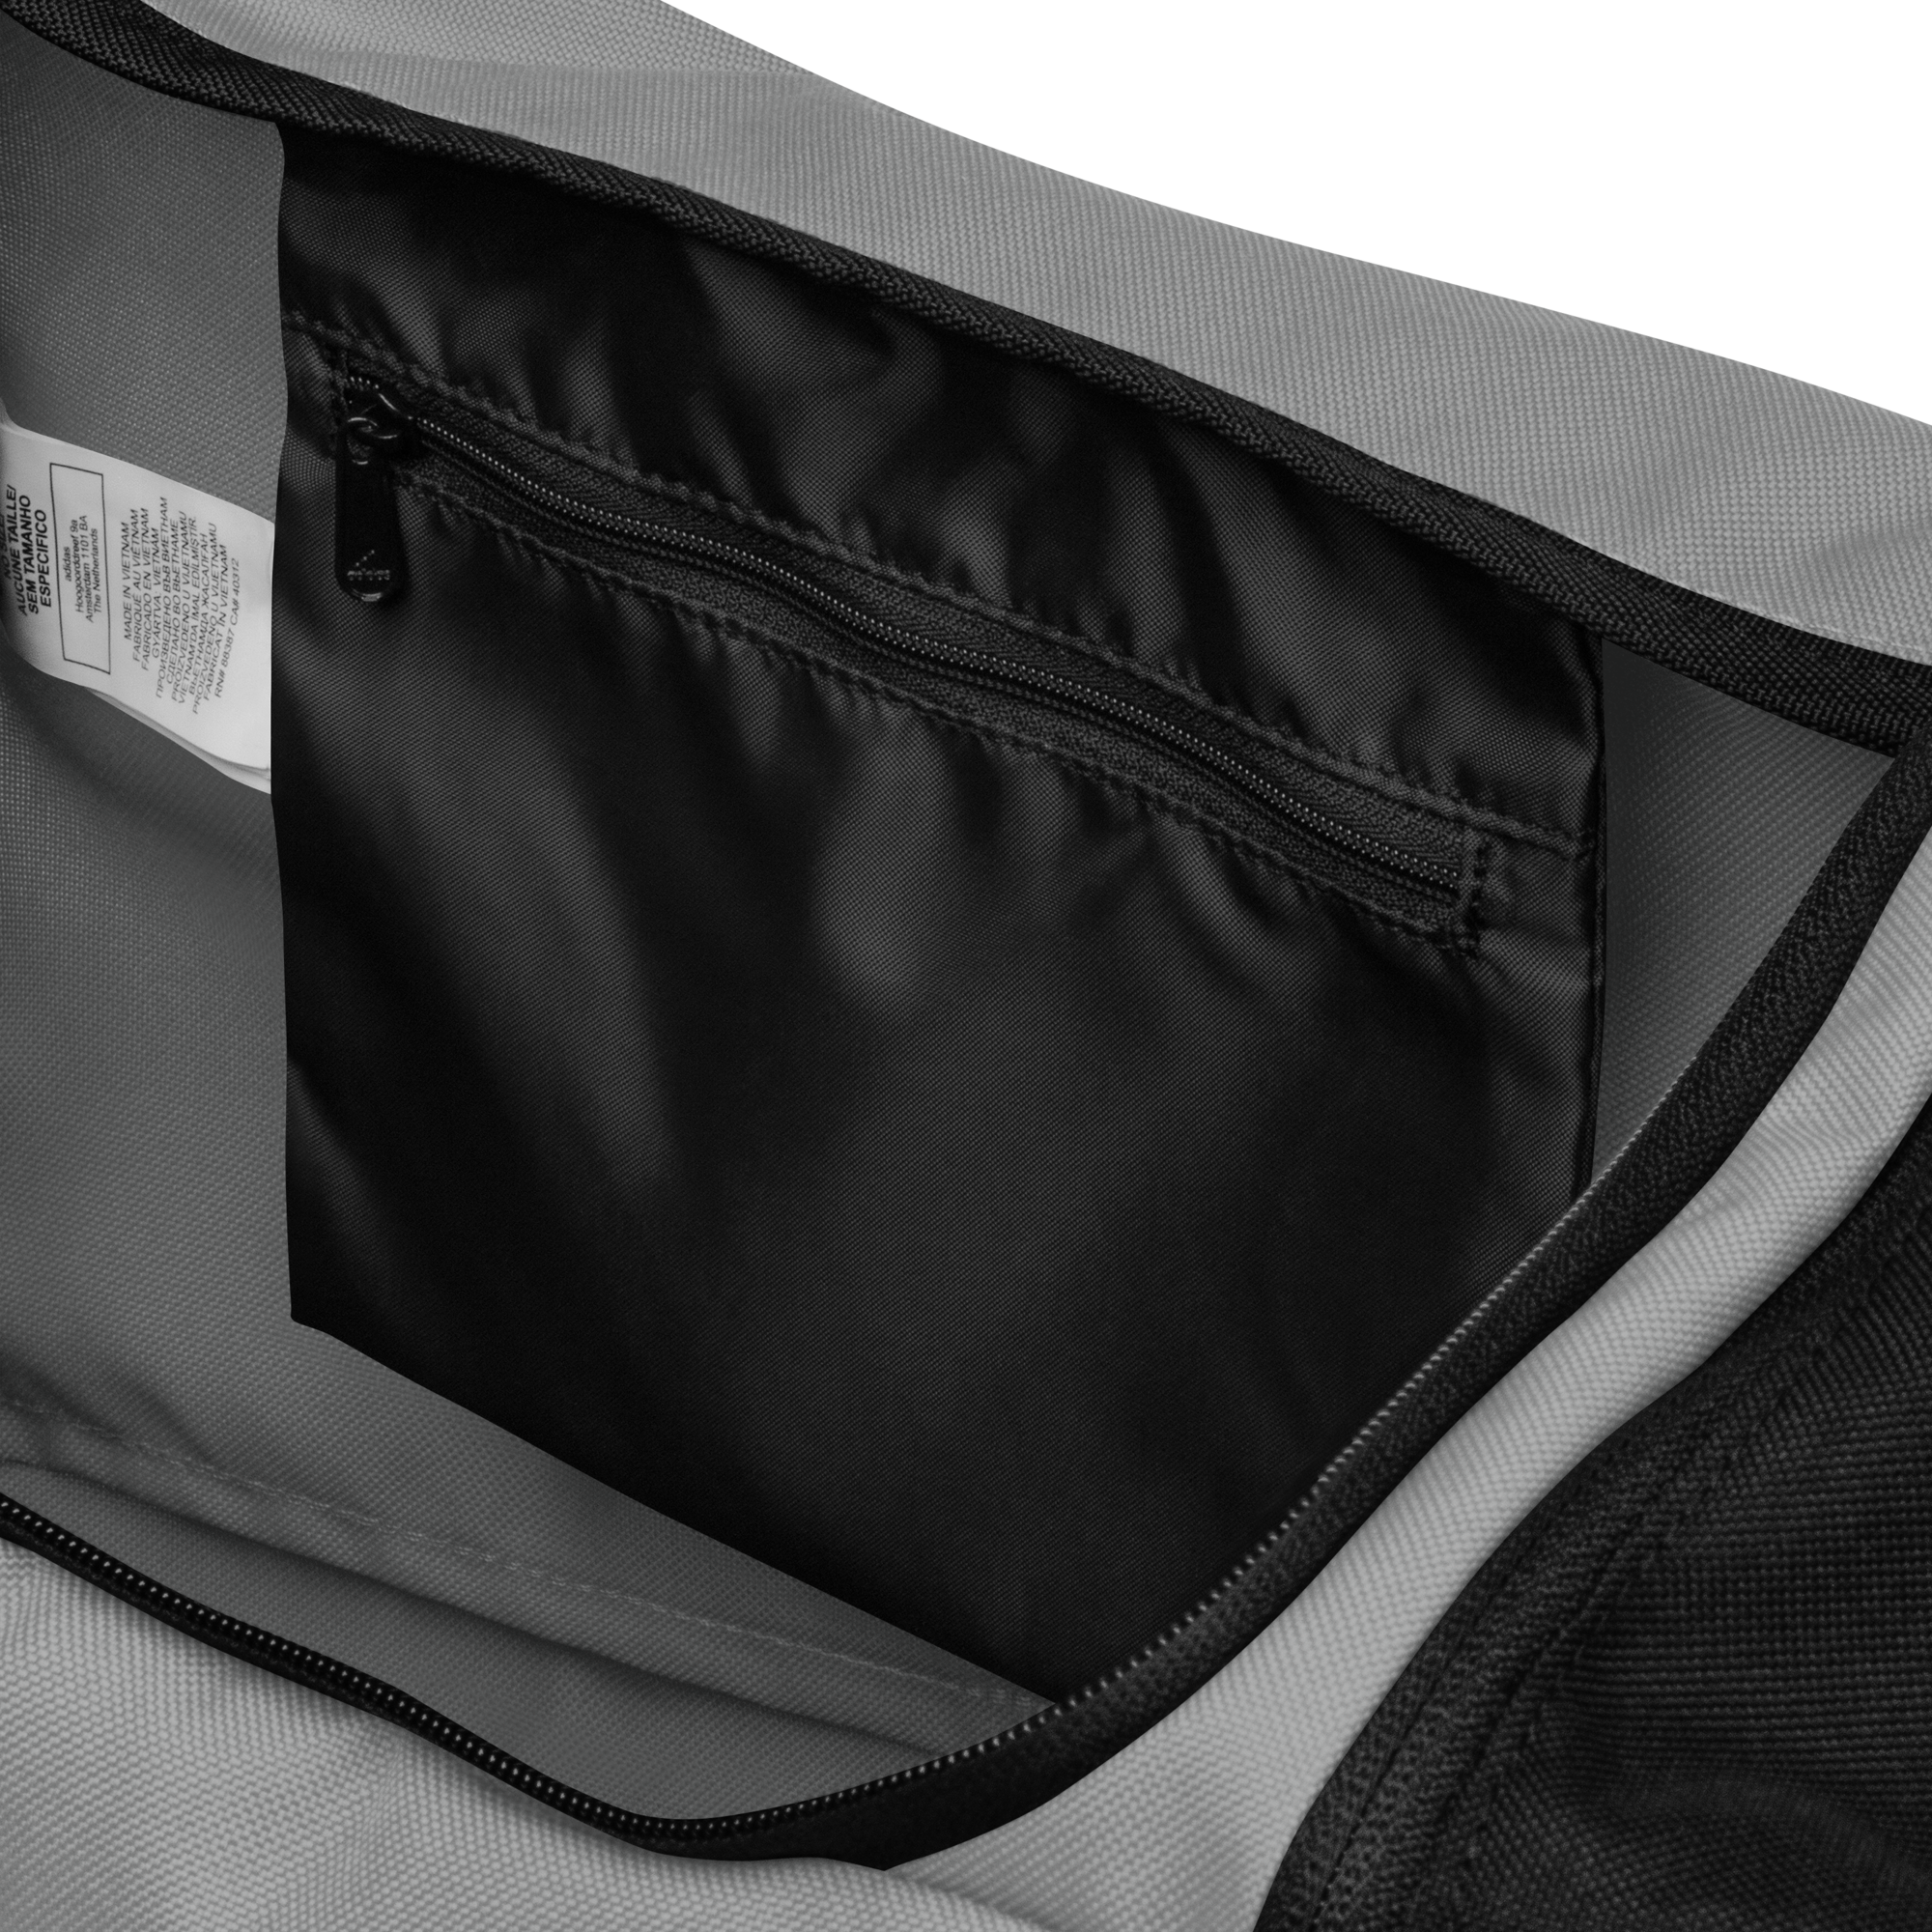 MJs Detailing Adidas Duffle Bag